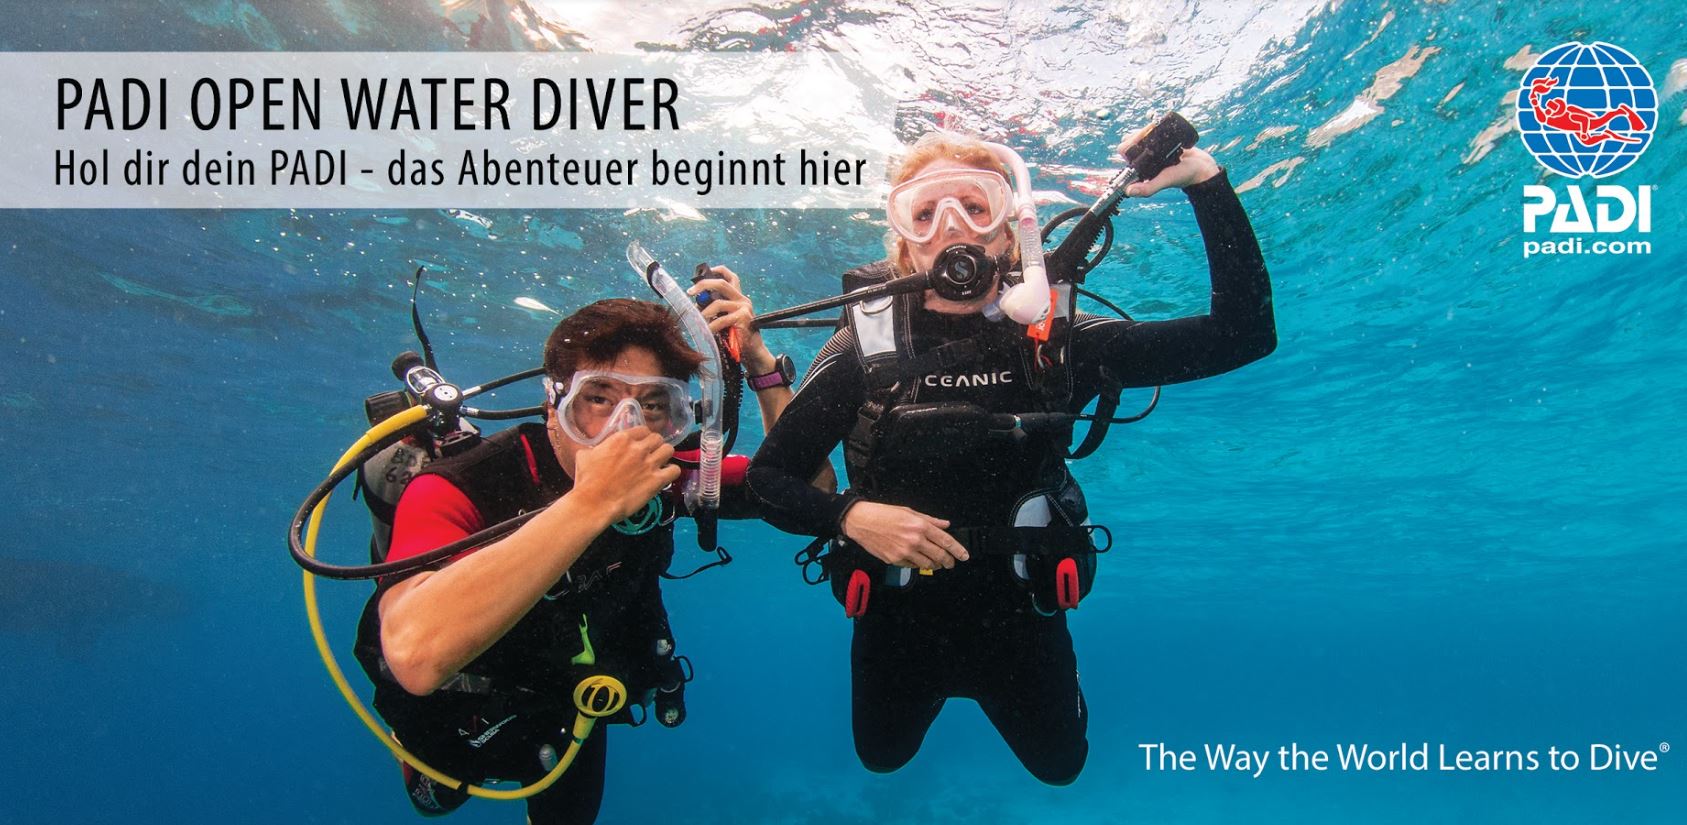 Padi open. Пади опен Ватер дайвер. Open Water Diver карта. Padi open Water Diver вопросы. Open Water Diver надпись.